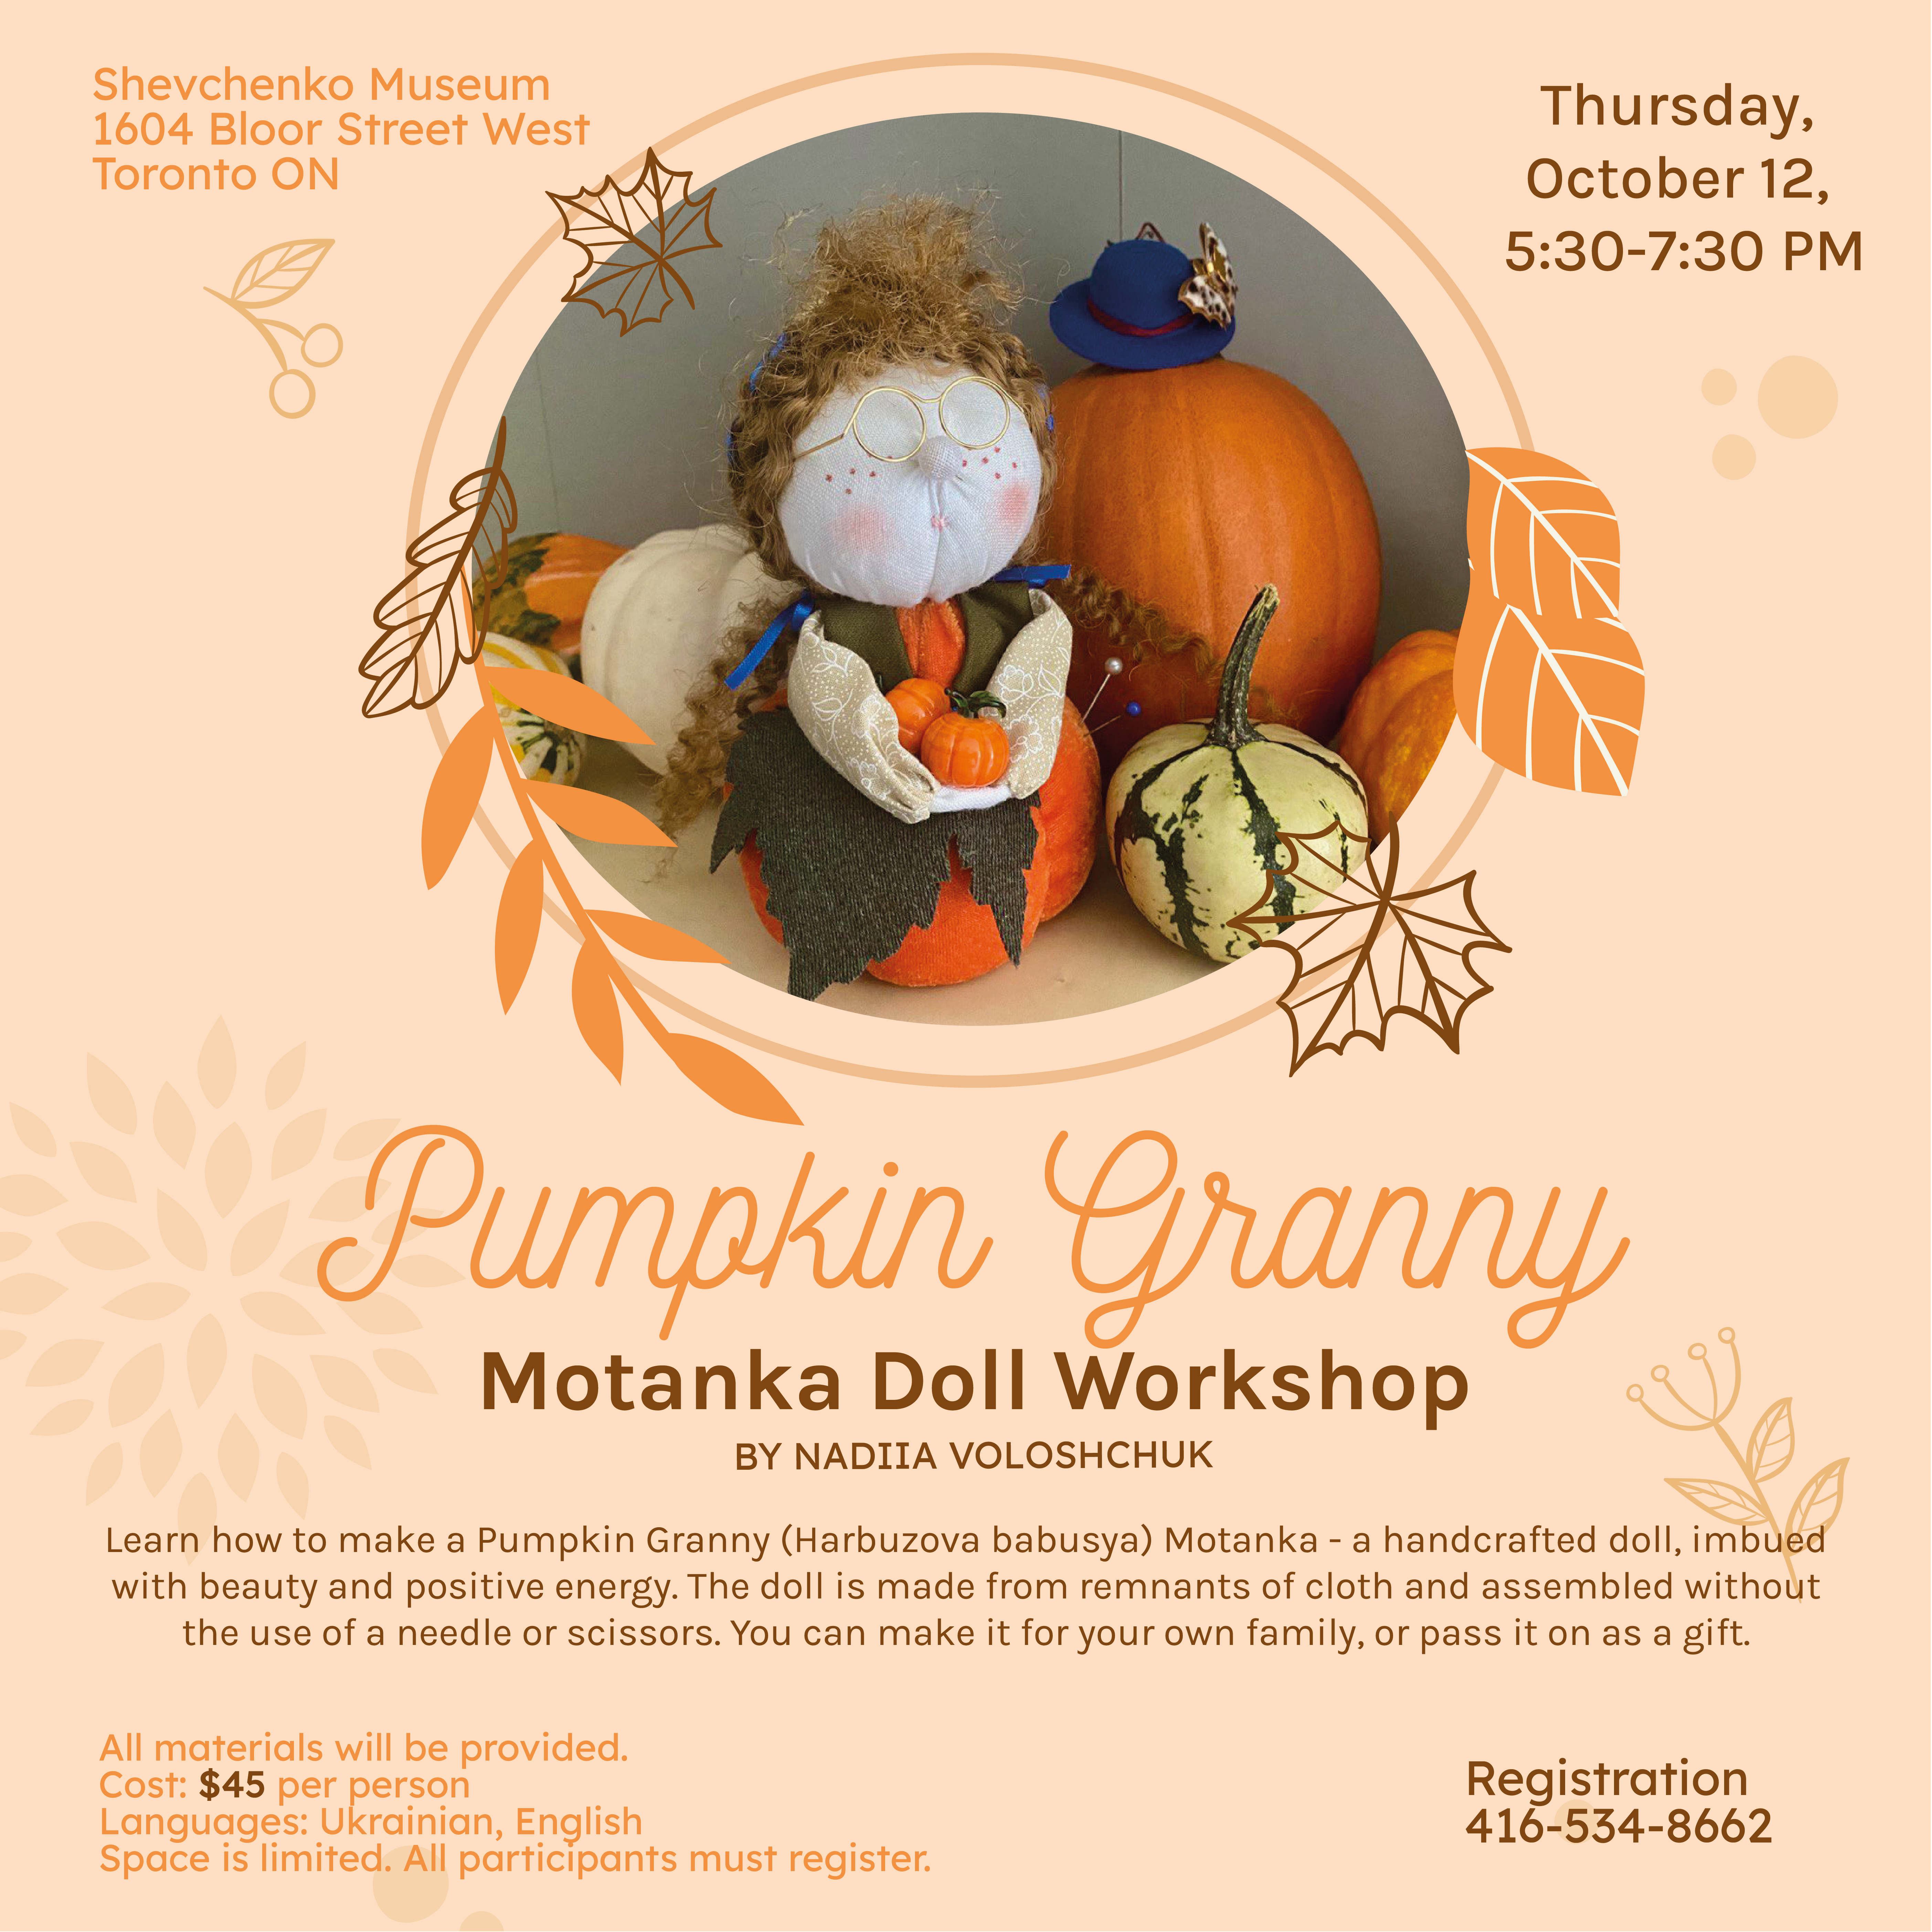 Pumpkin Granny (Harbuzova babusya) Motanka Doll